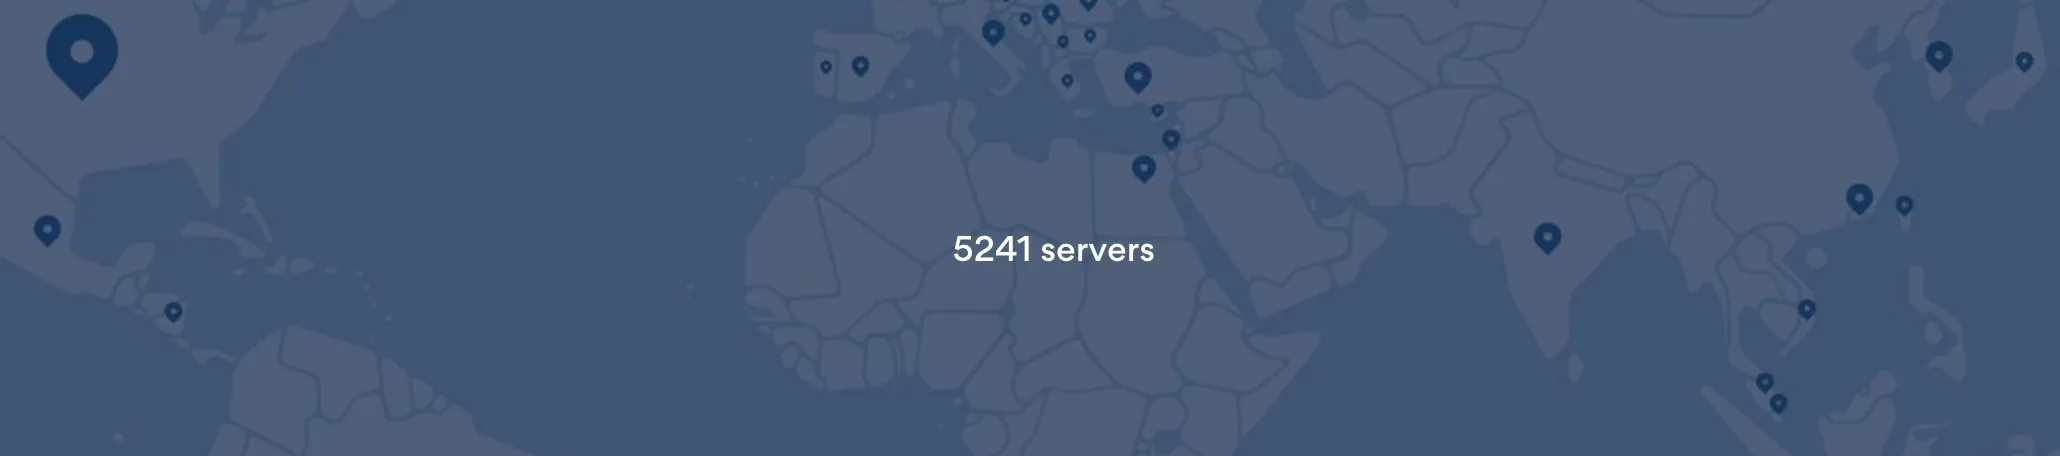 VPN server statistics